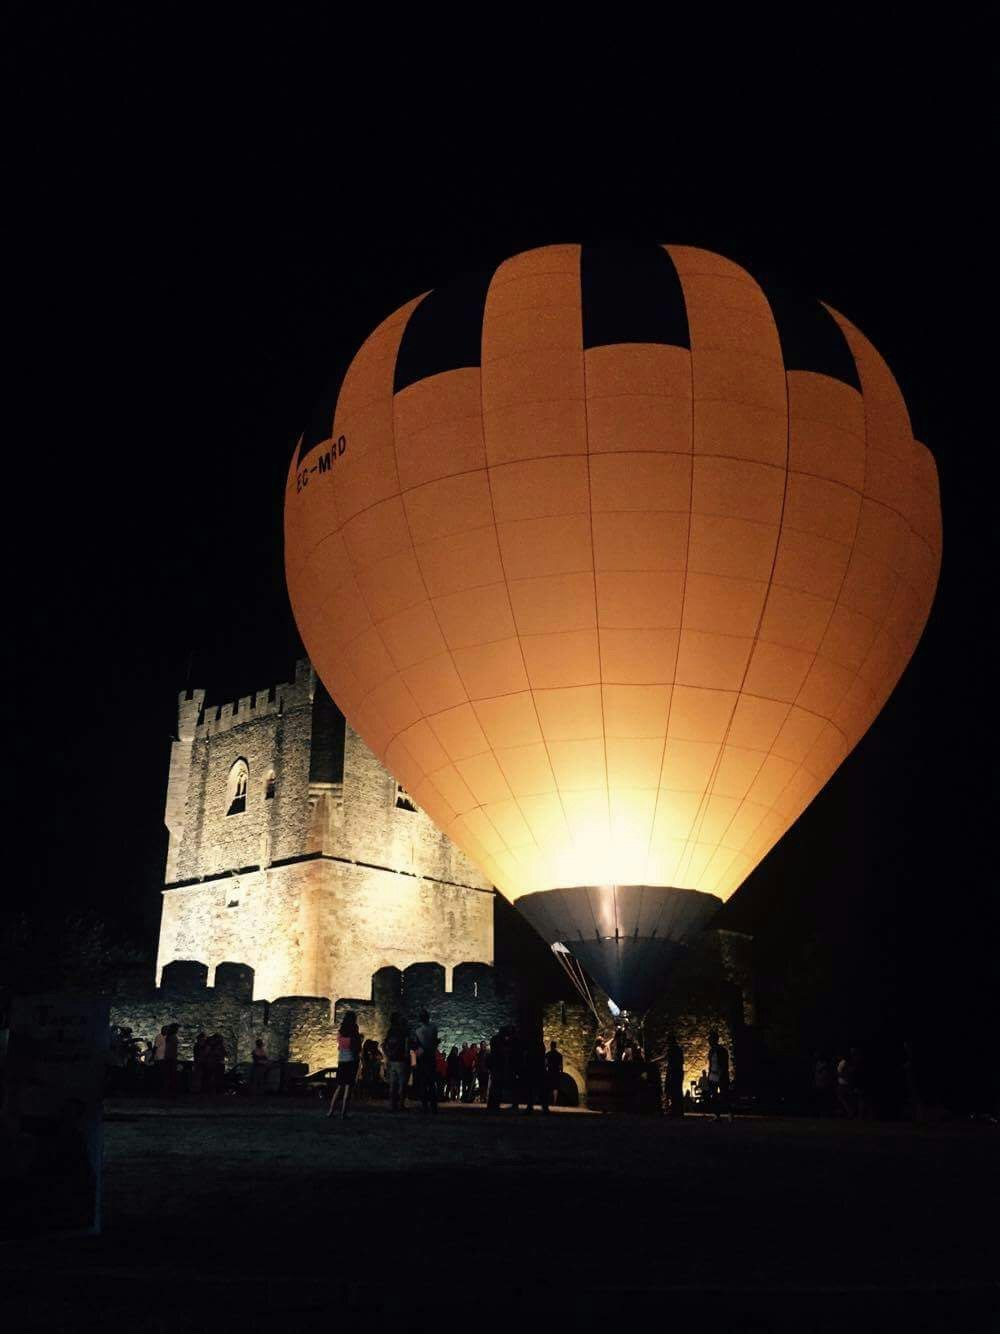 Hot air balloon in Bragança!